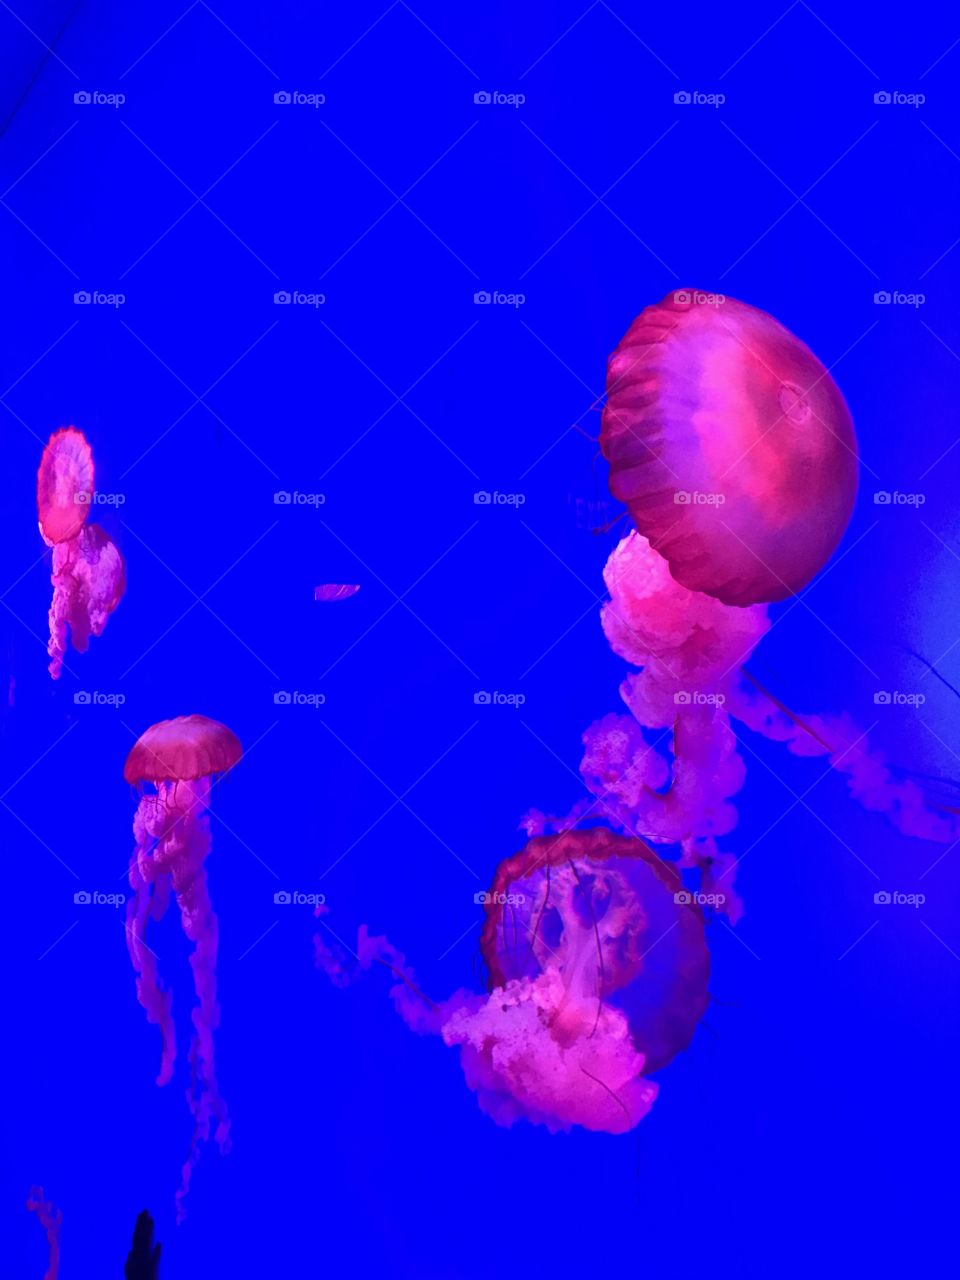 Jellyfish light up Ripley's Aquarium Toronto 